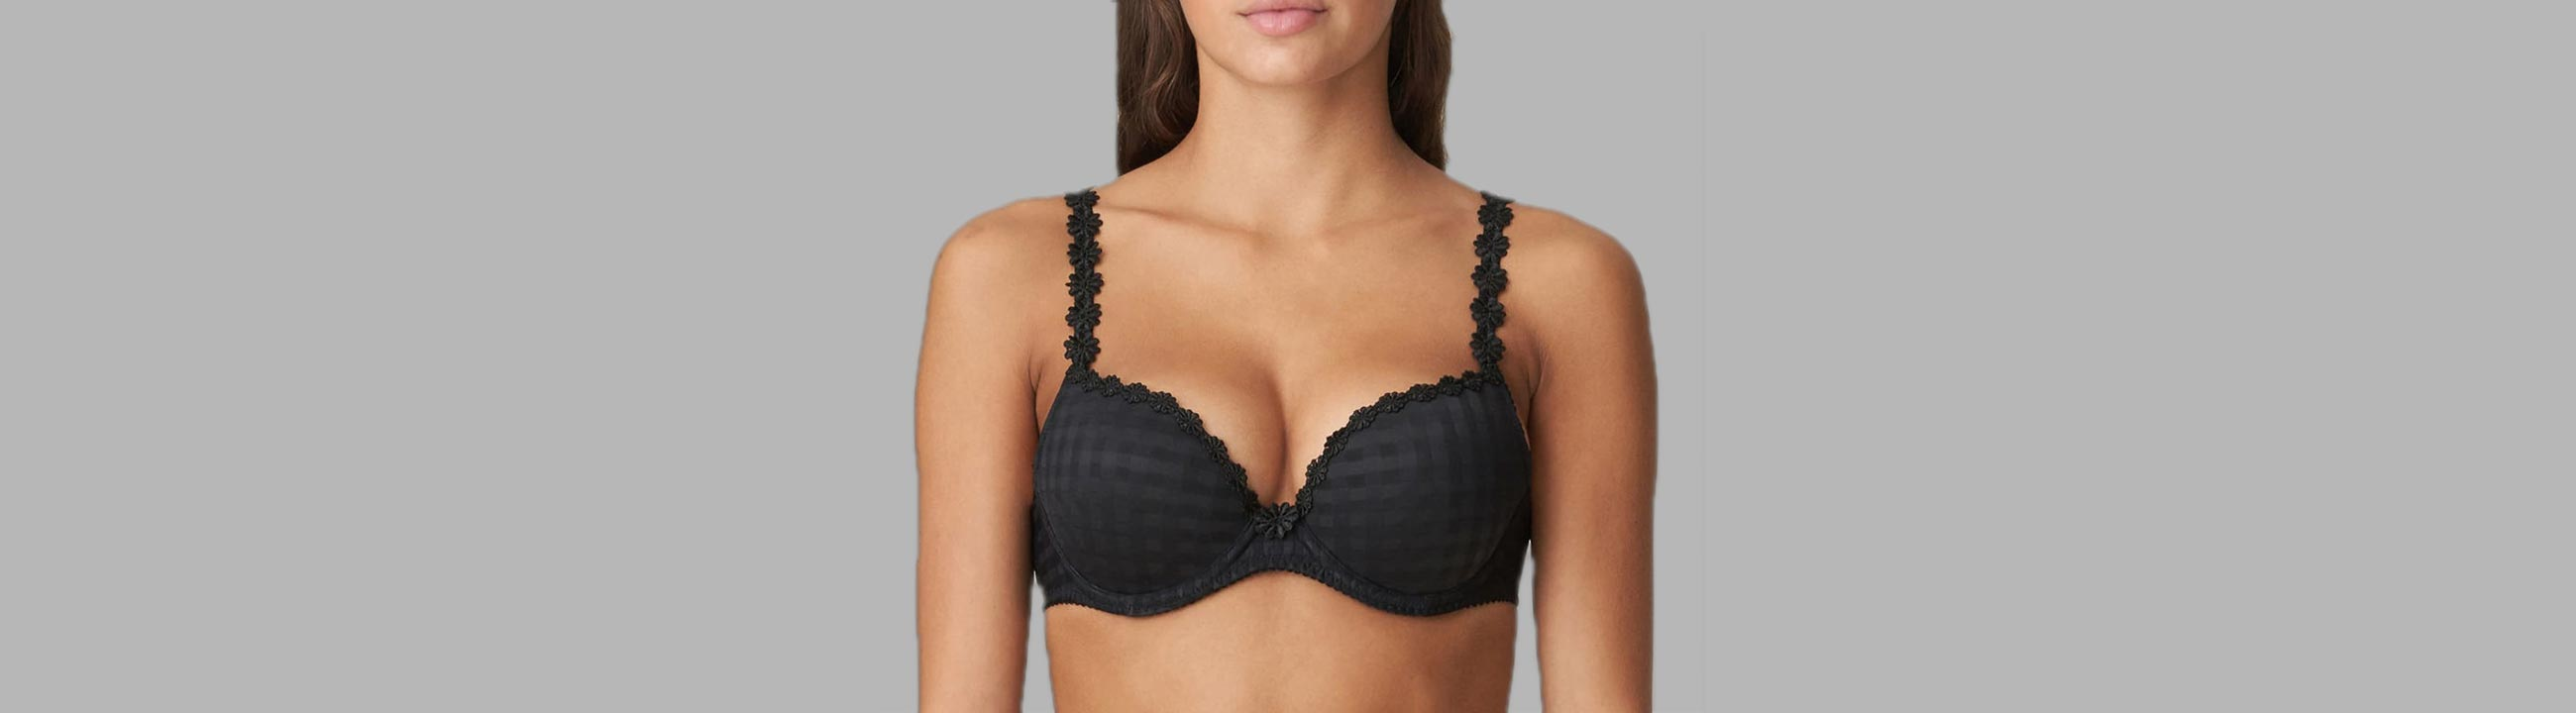 Seamless push up bra - 10 products